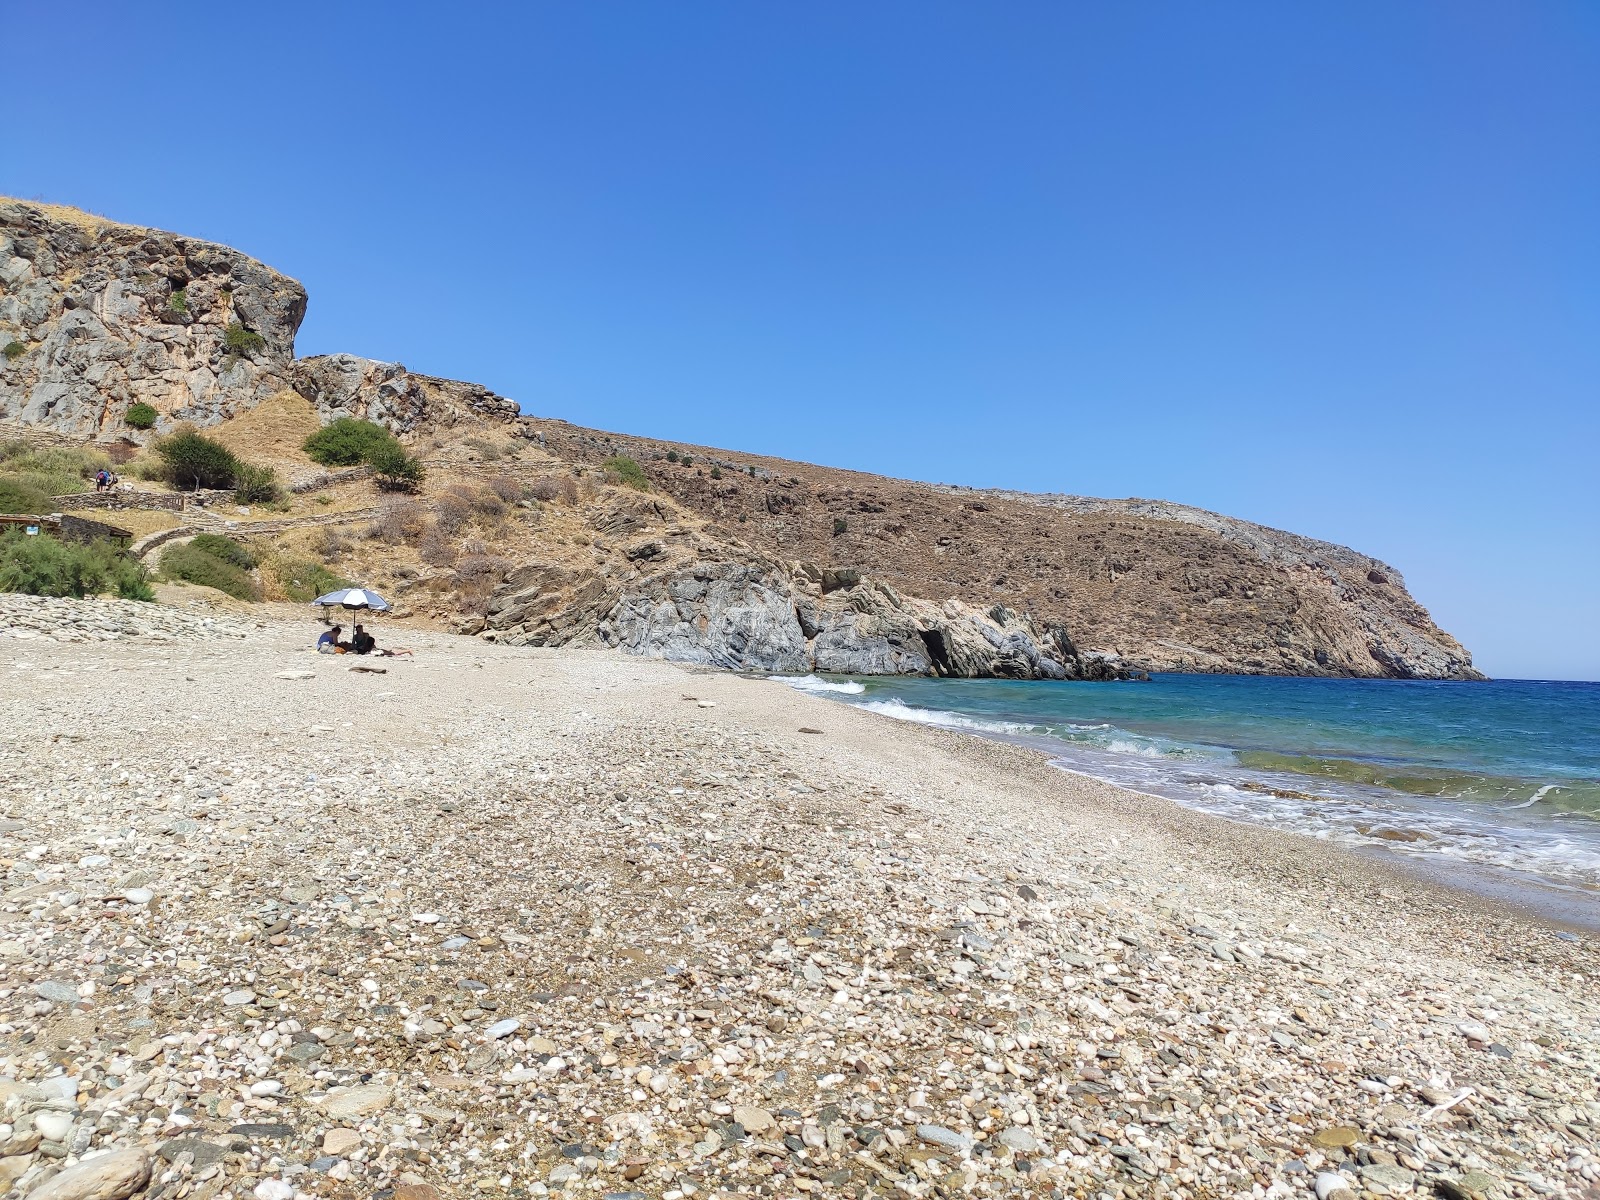 Foto di Karthea beach ubicato in zona naturale